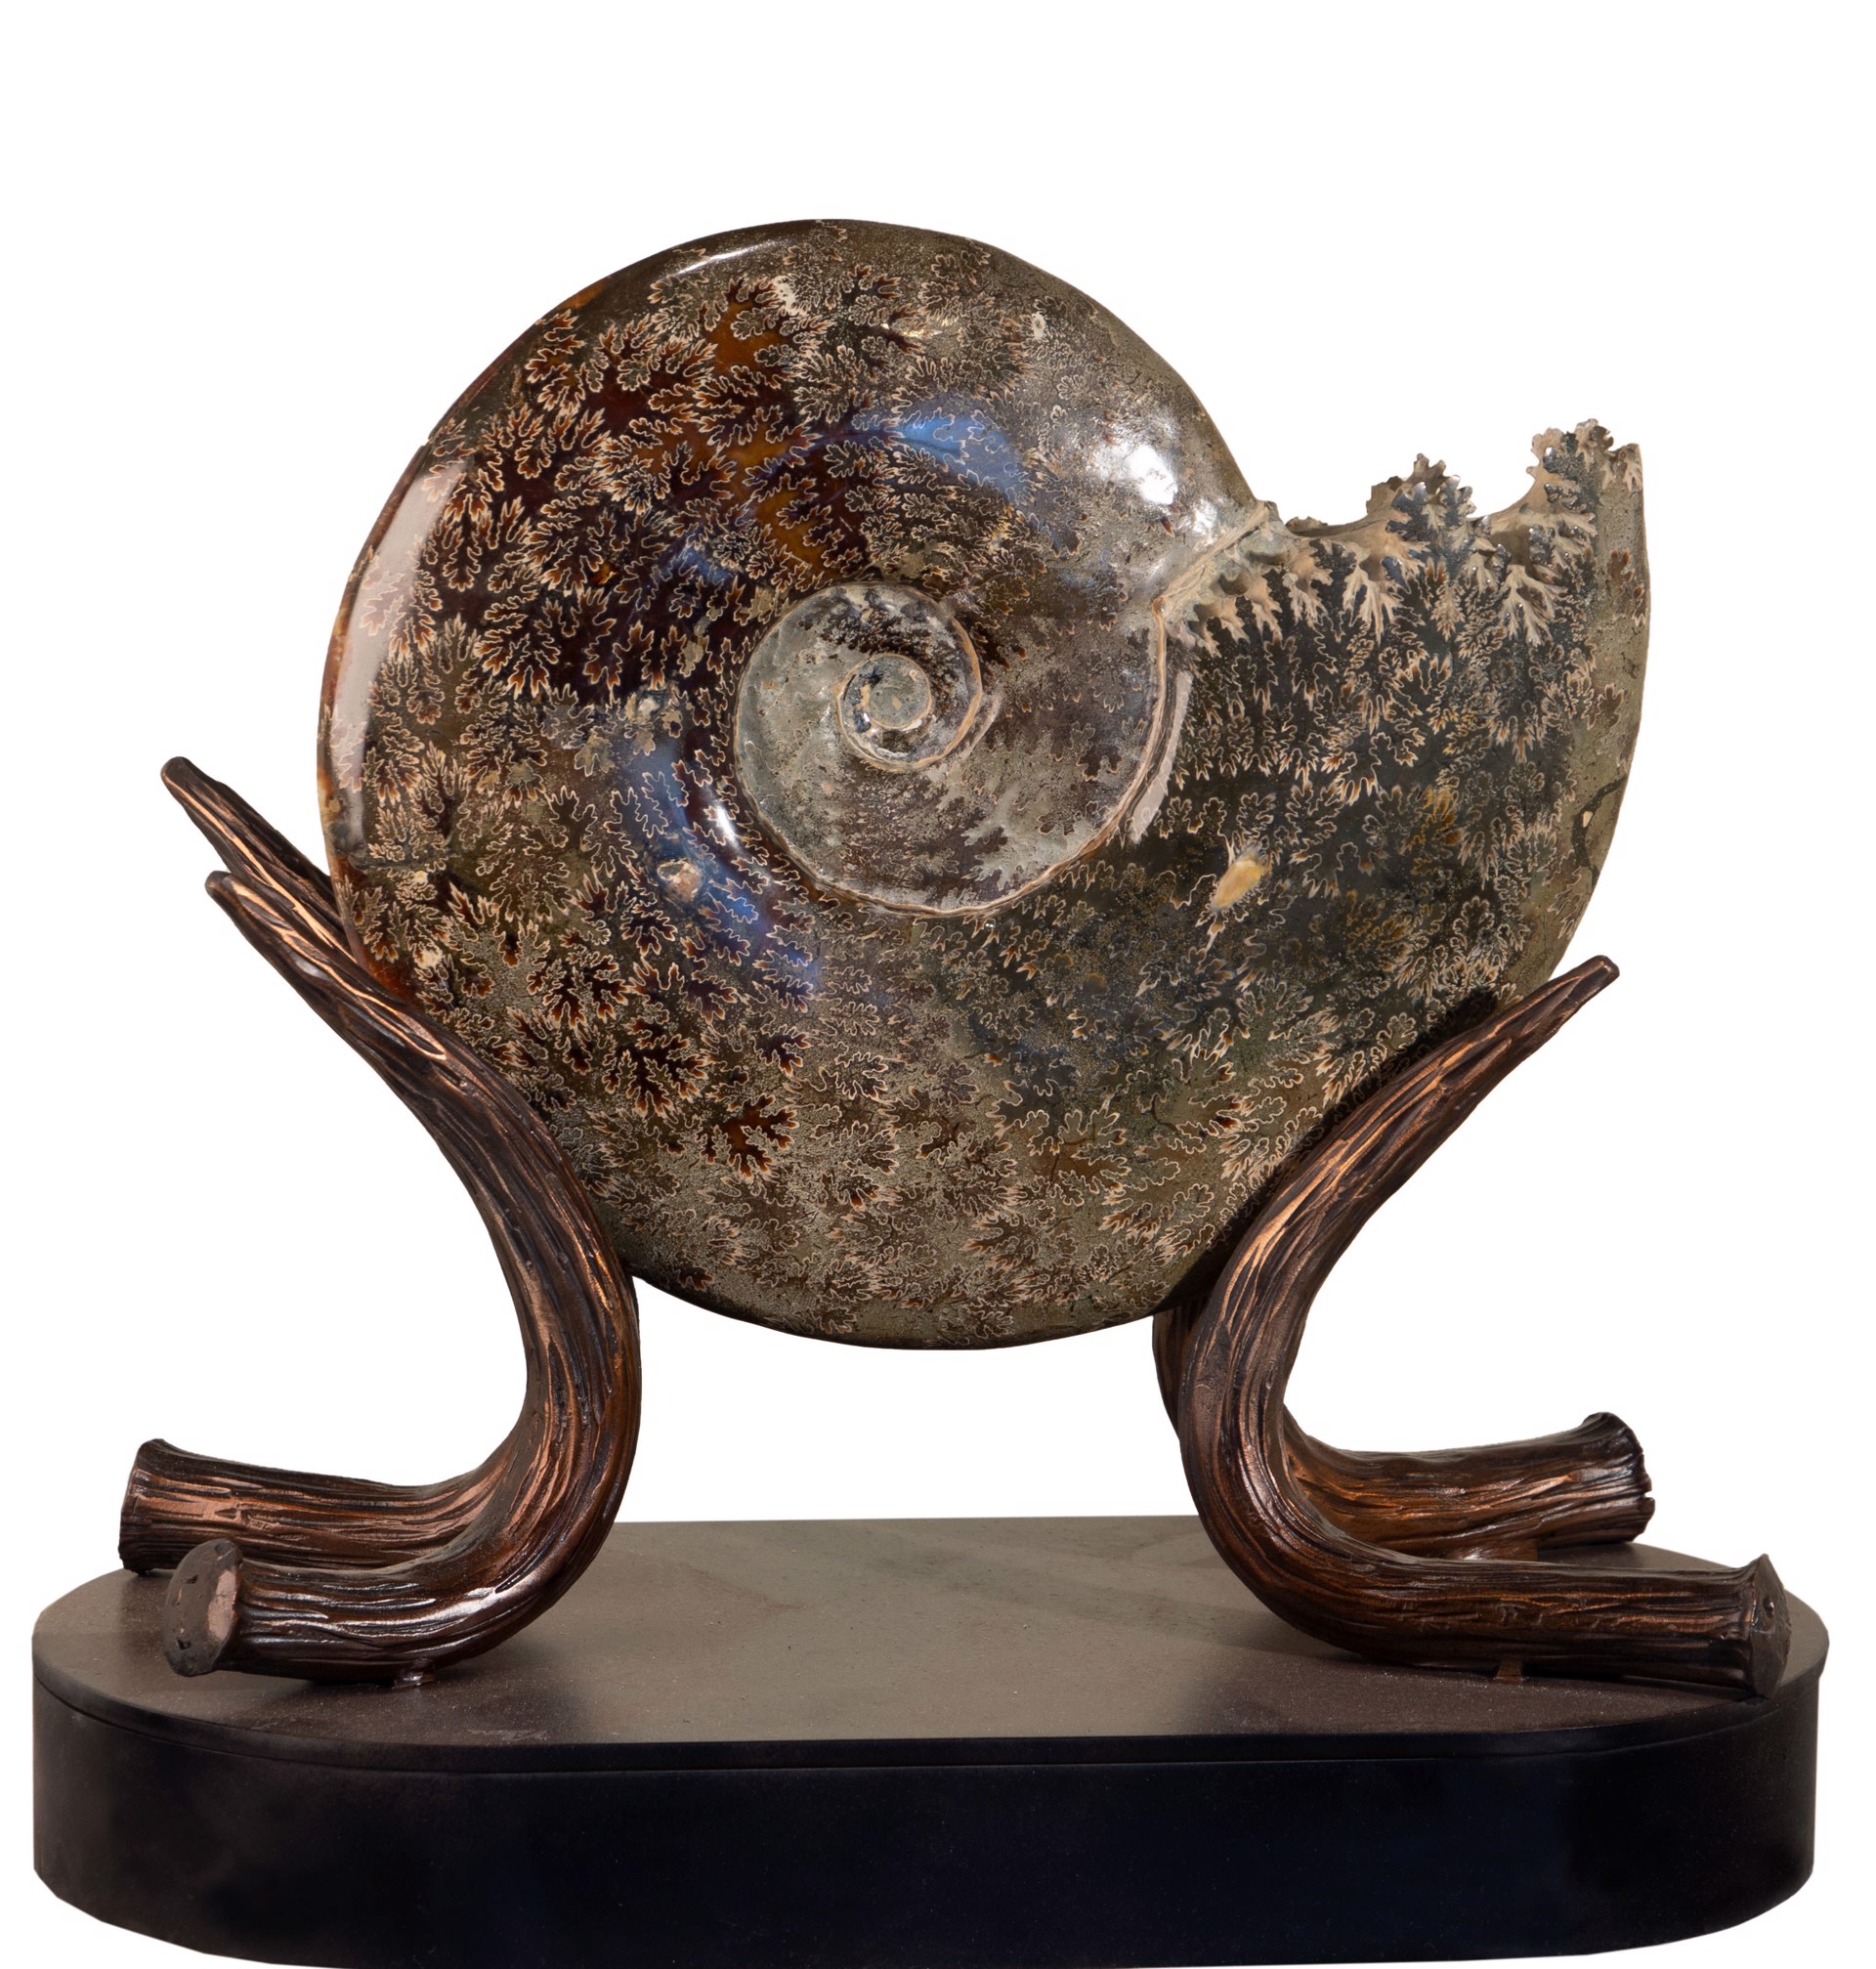 Ammonite by Jim Vilona